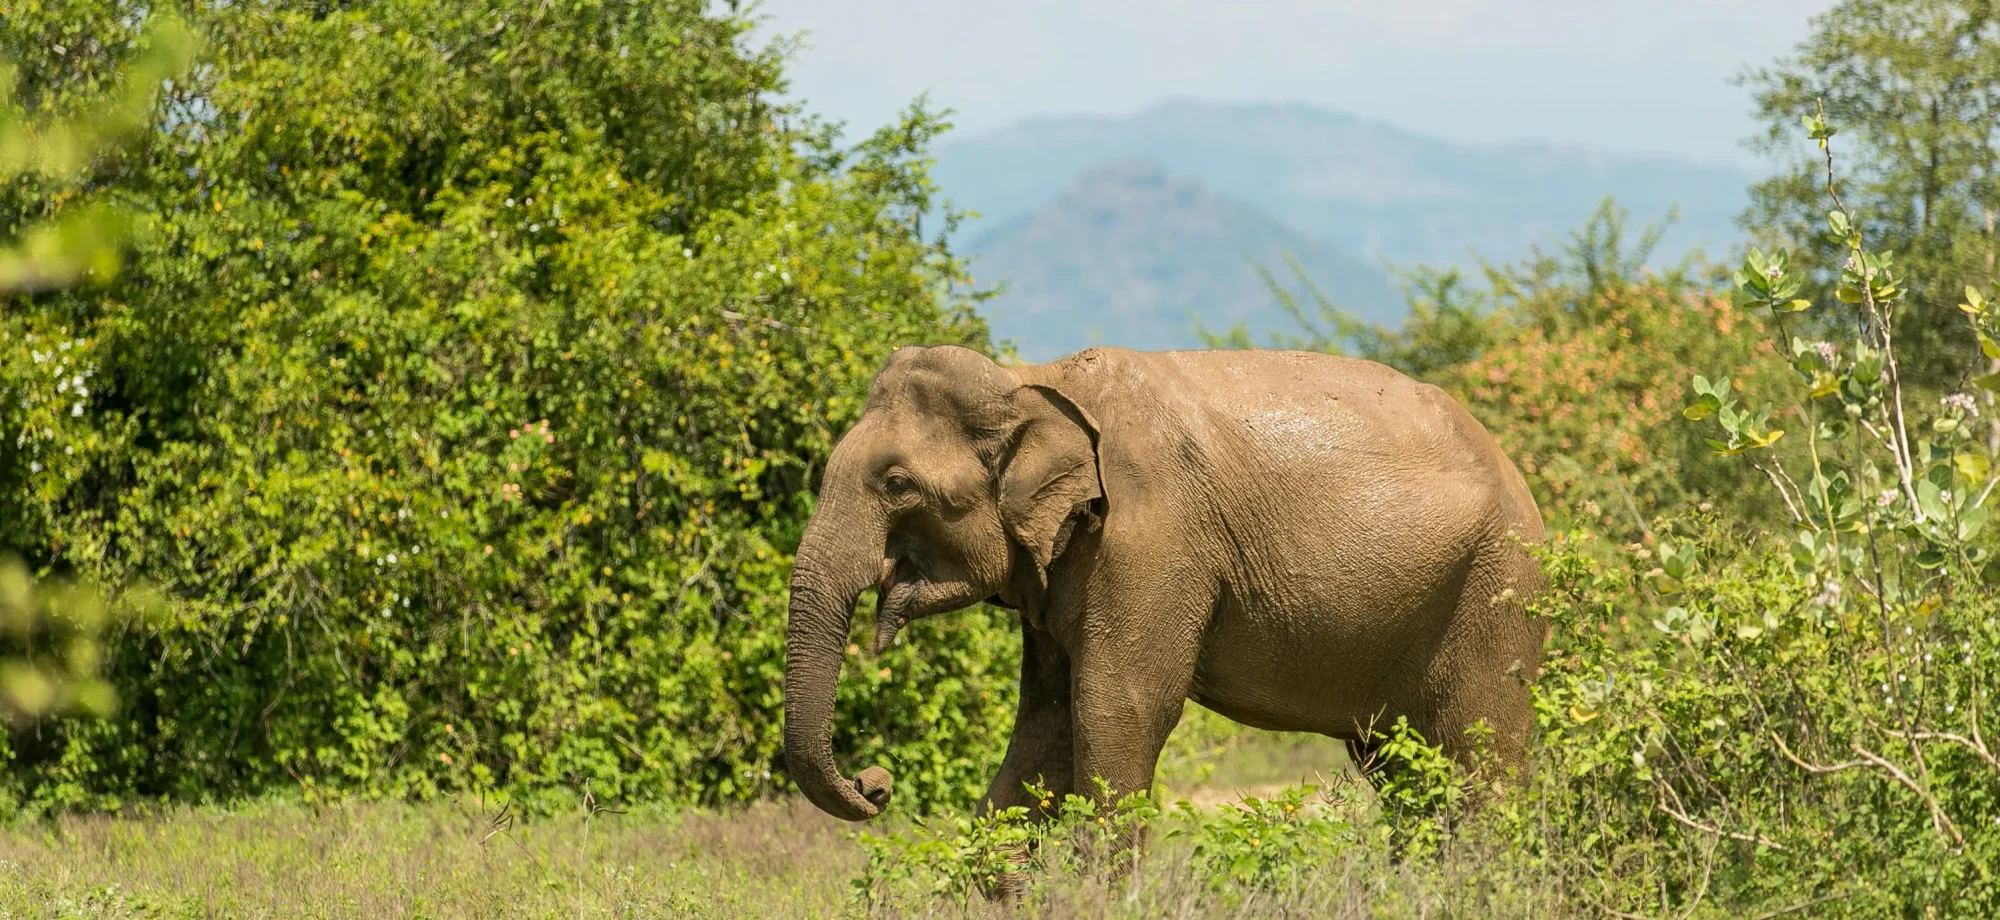 An elephant wanders the grassy grounds of Udawalawe National Park.